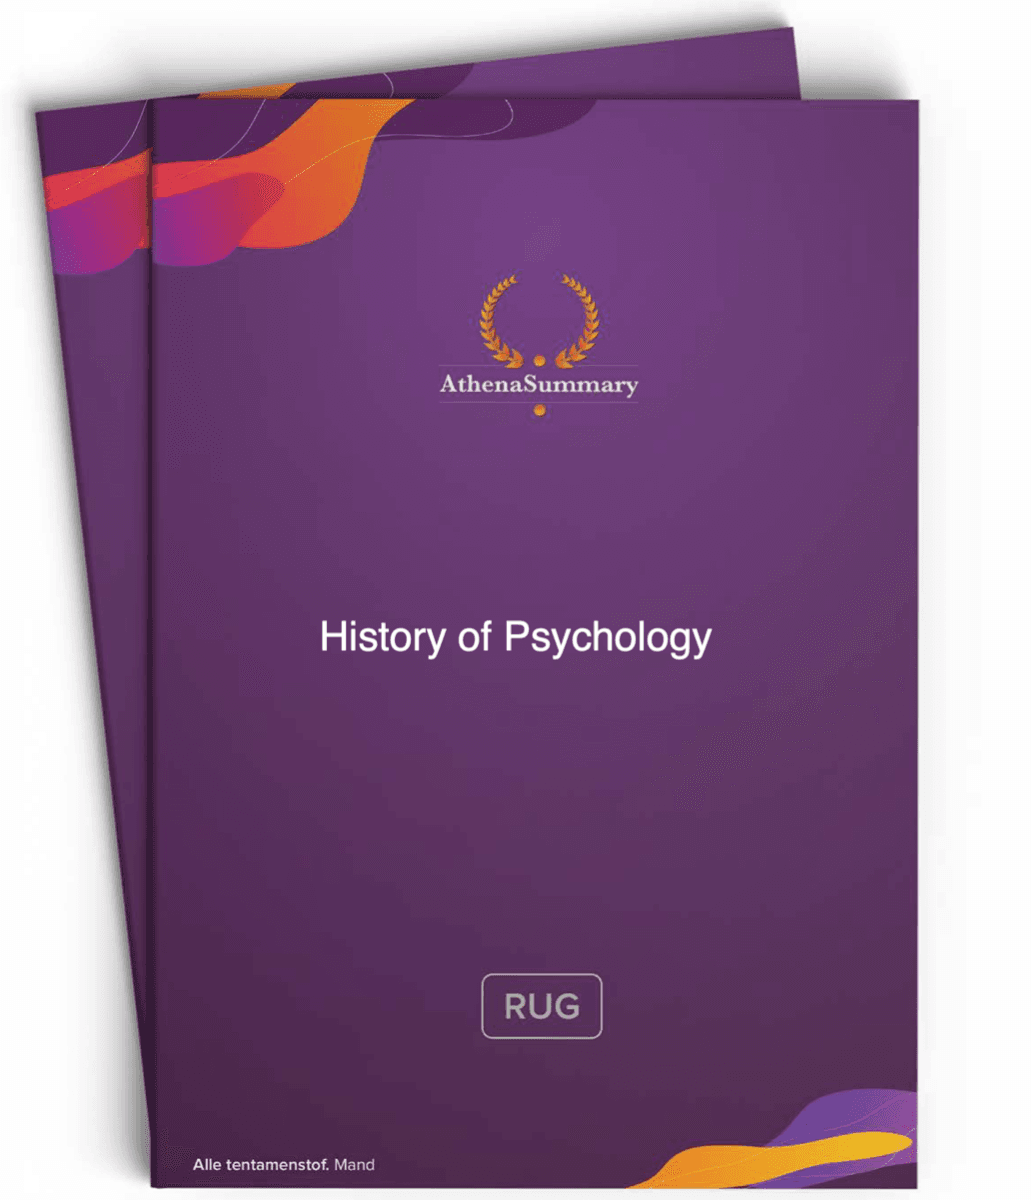 Literature summary: History of Psychology